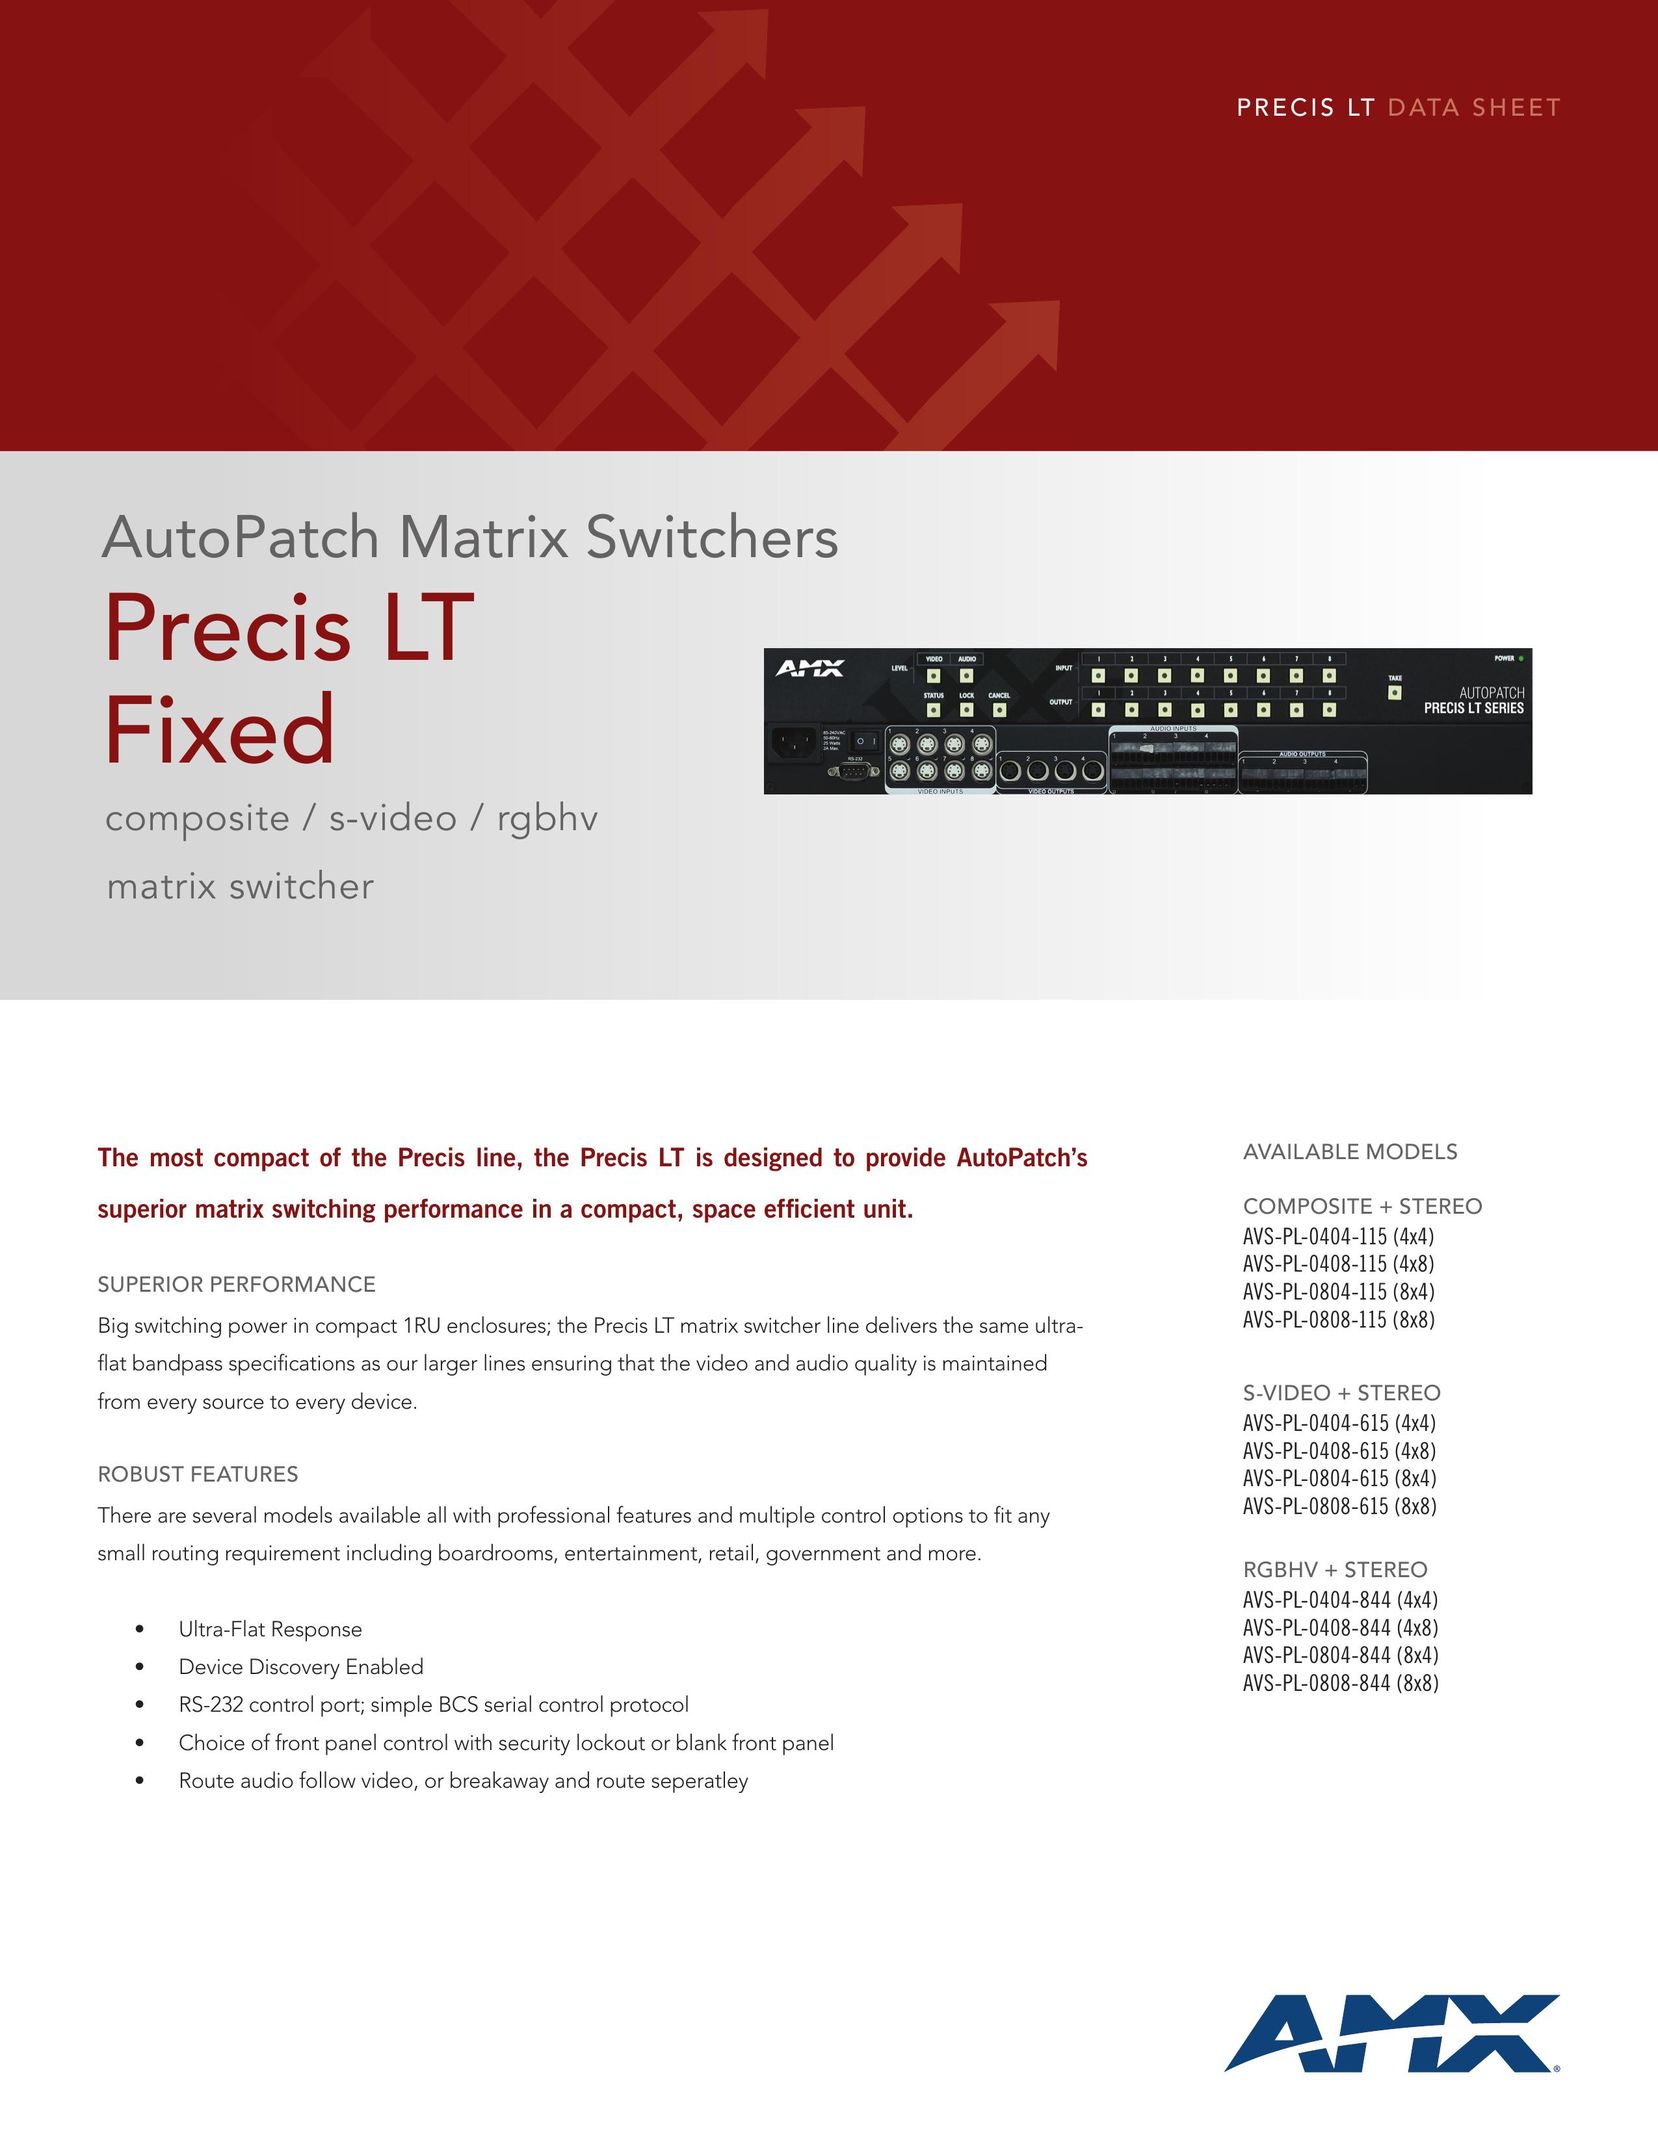 AMX AVS-PL-0804-615 Switch User Manual